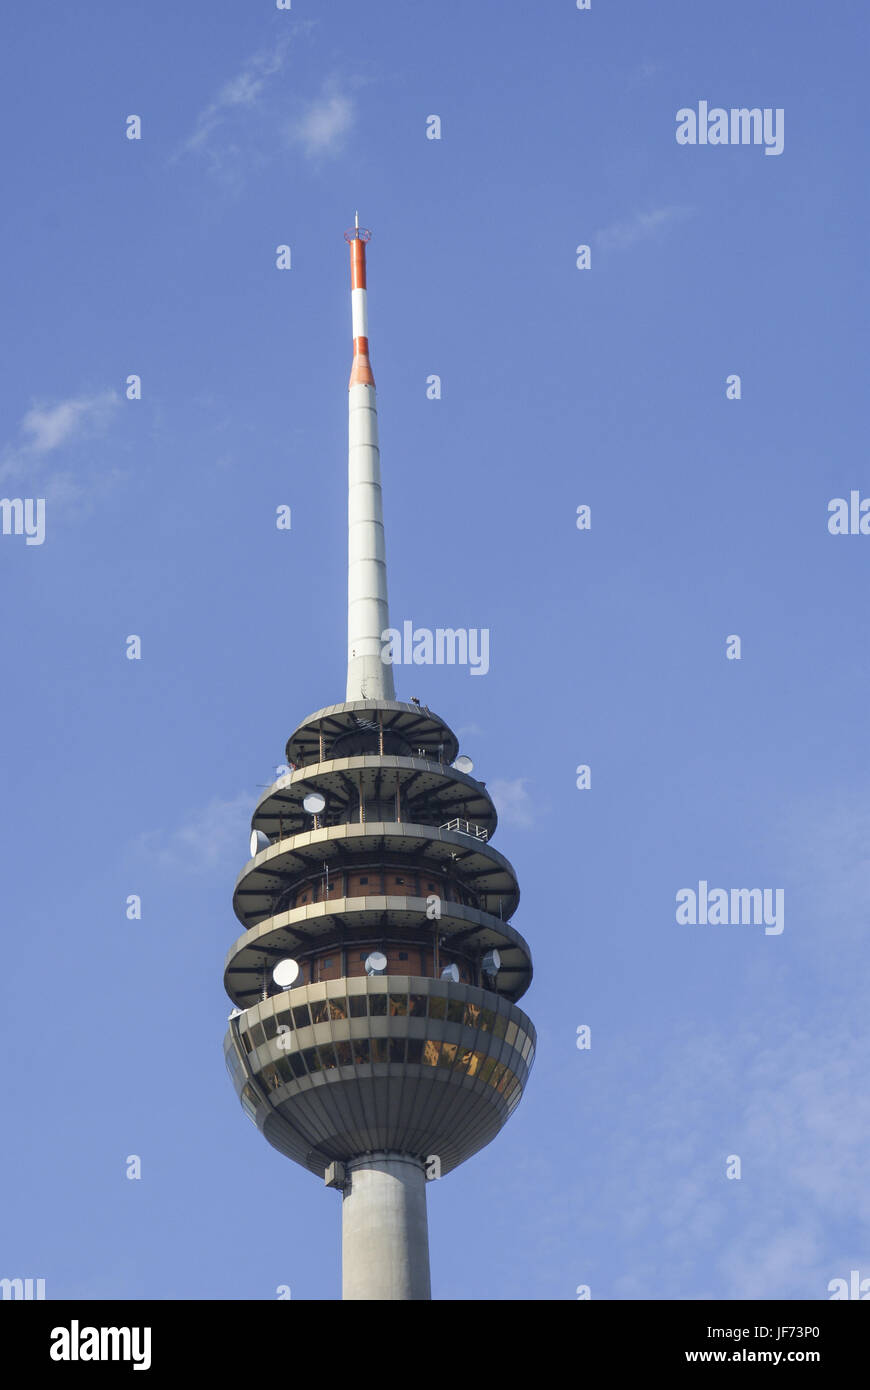 Telekommunikation Turm in Nürnberg, Deutschland Stockfoto